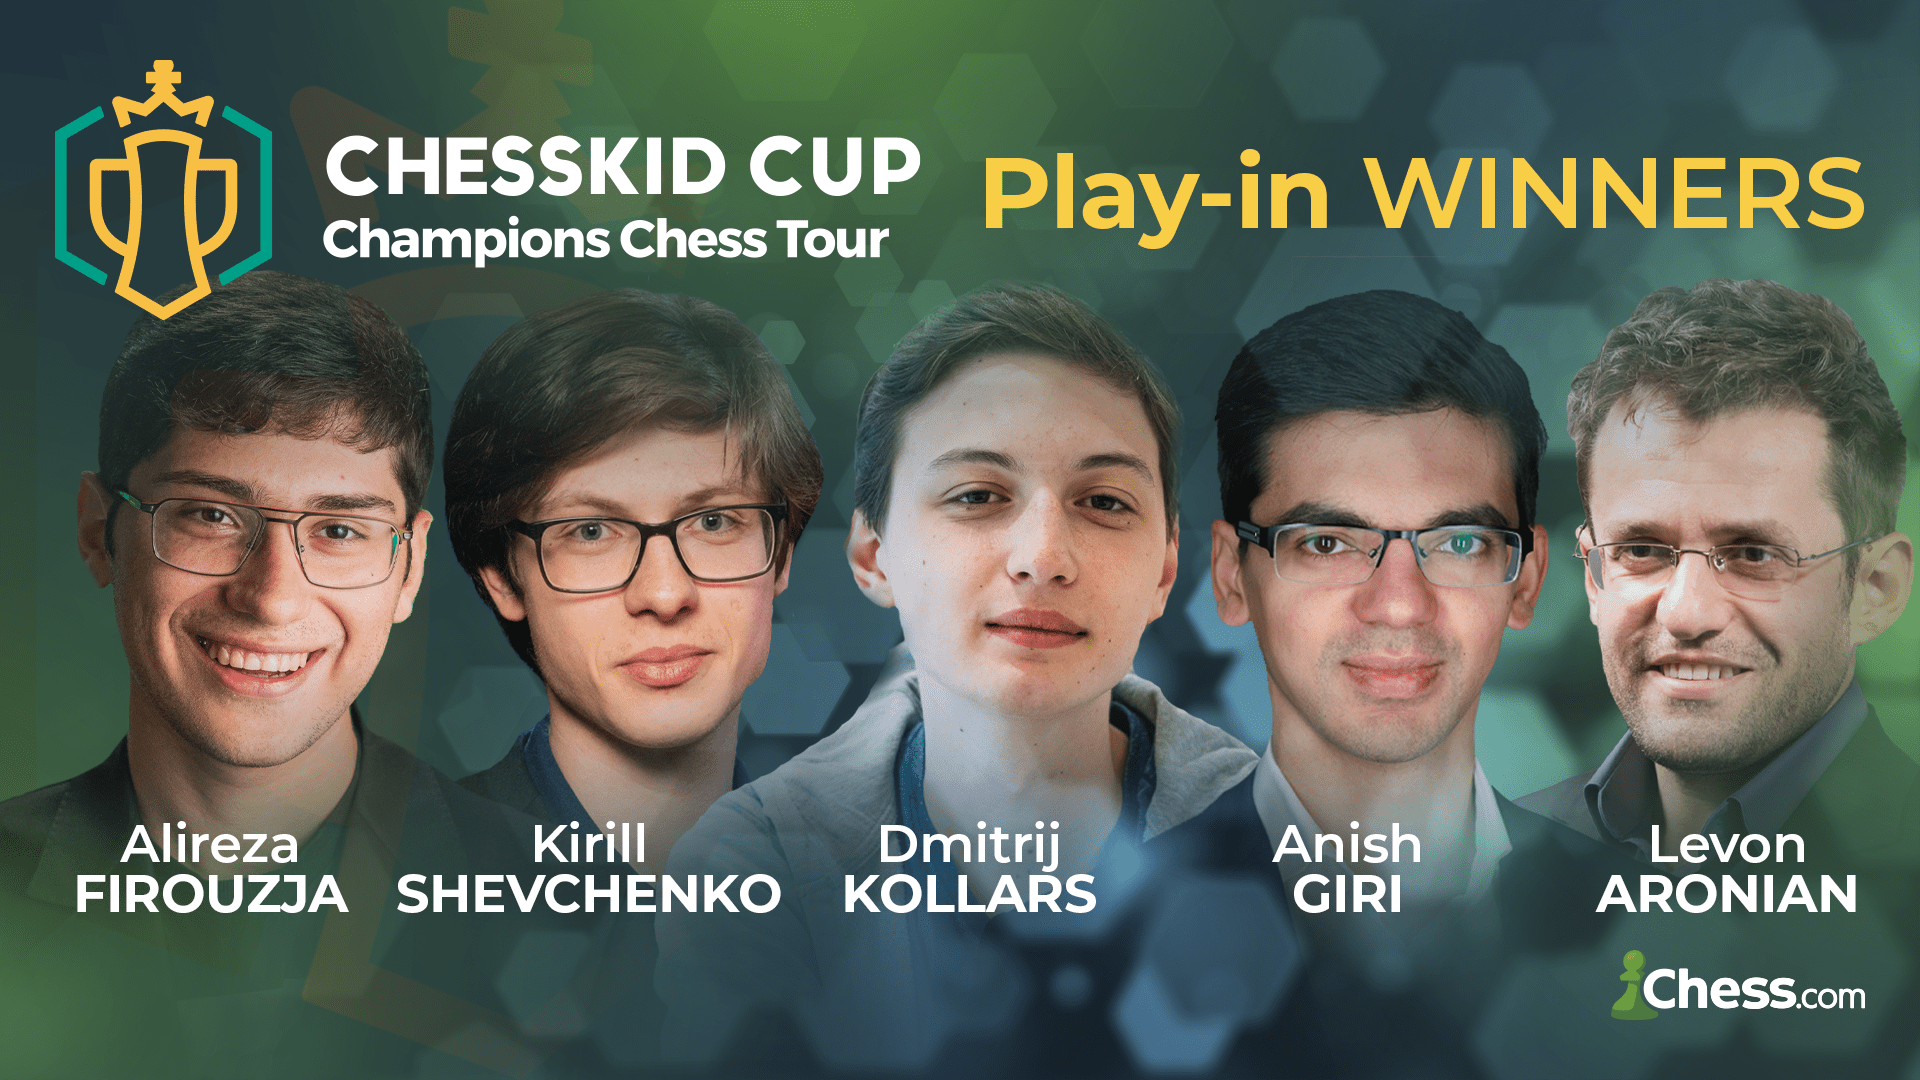 Firouzja, Shevchenko, Kollars, Giri, Aronian Qualify For ChessKid Cup Division I